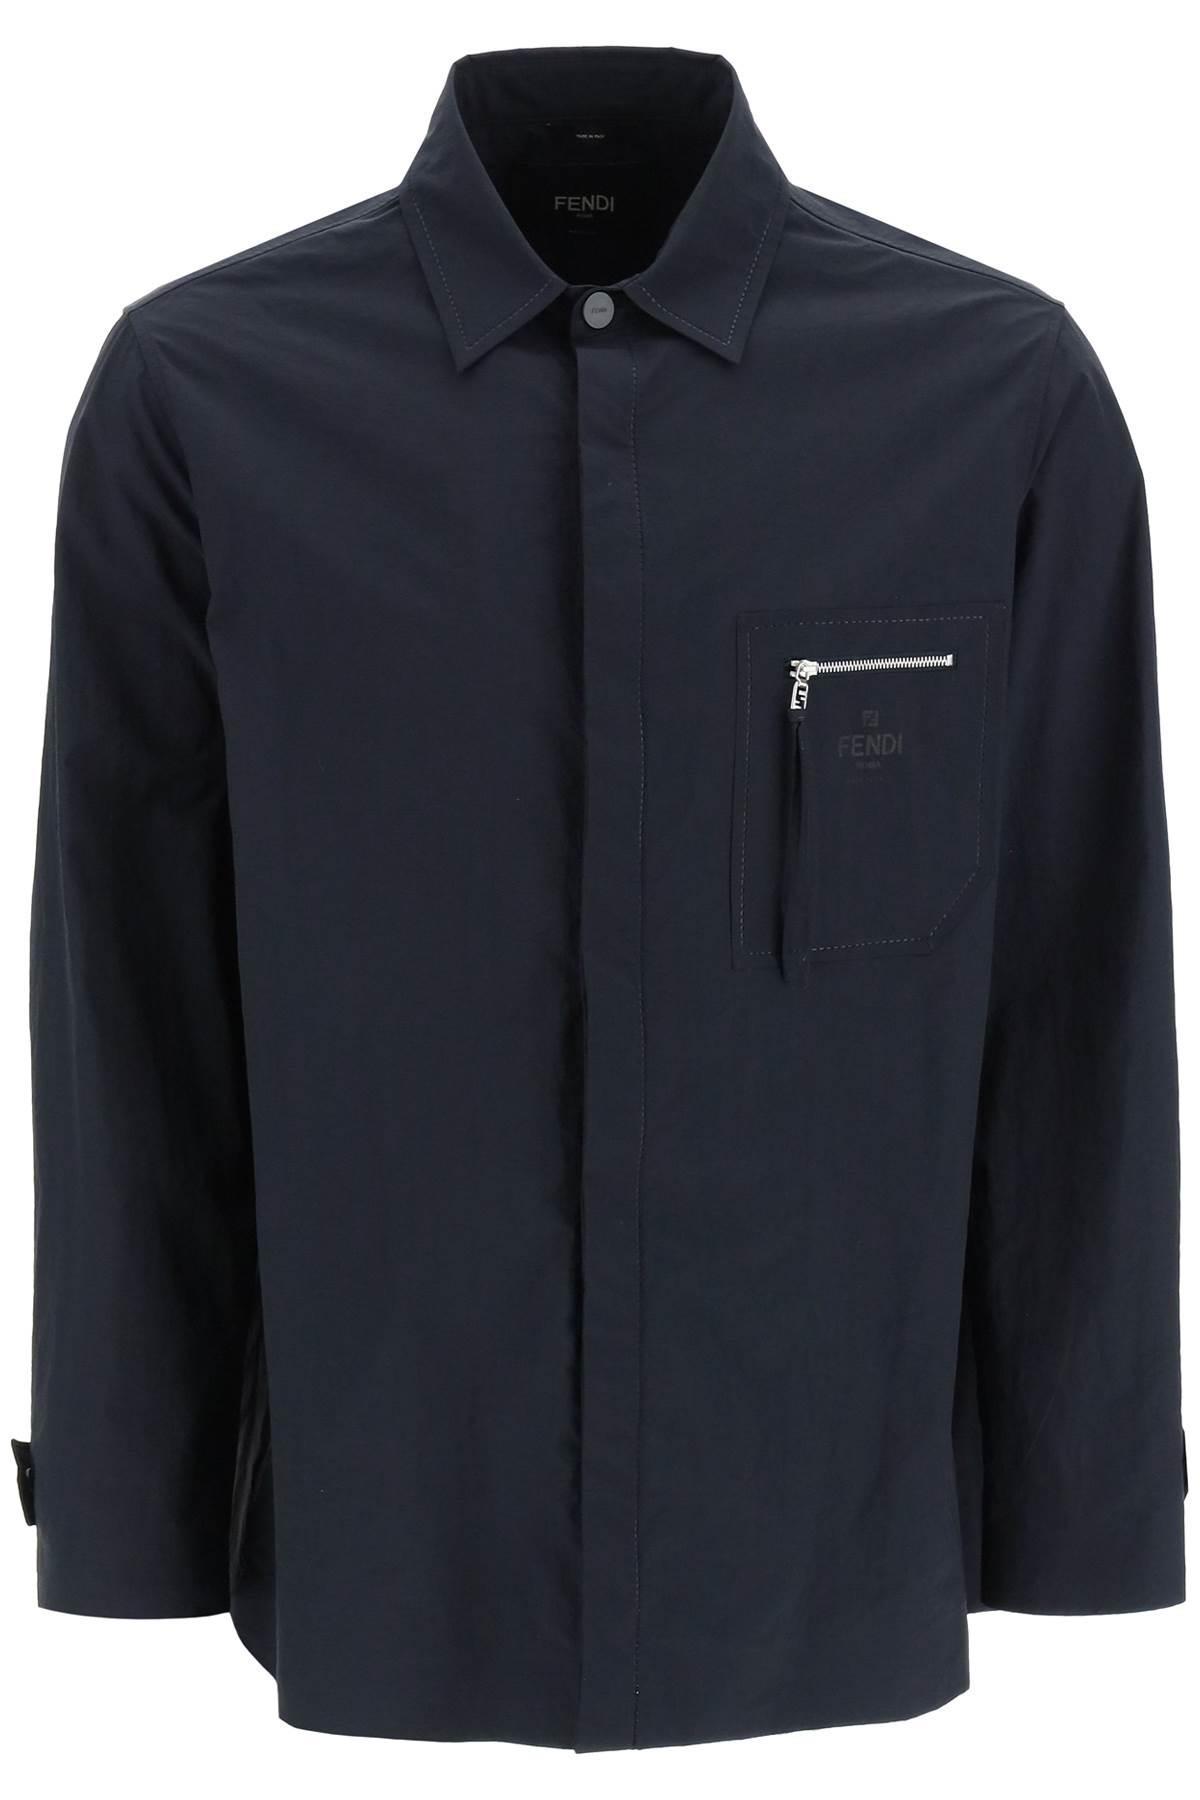 Fendi Lightweight Overshirt Jacket in Blue for Men | Lyst